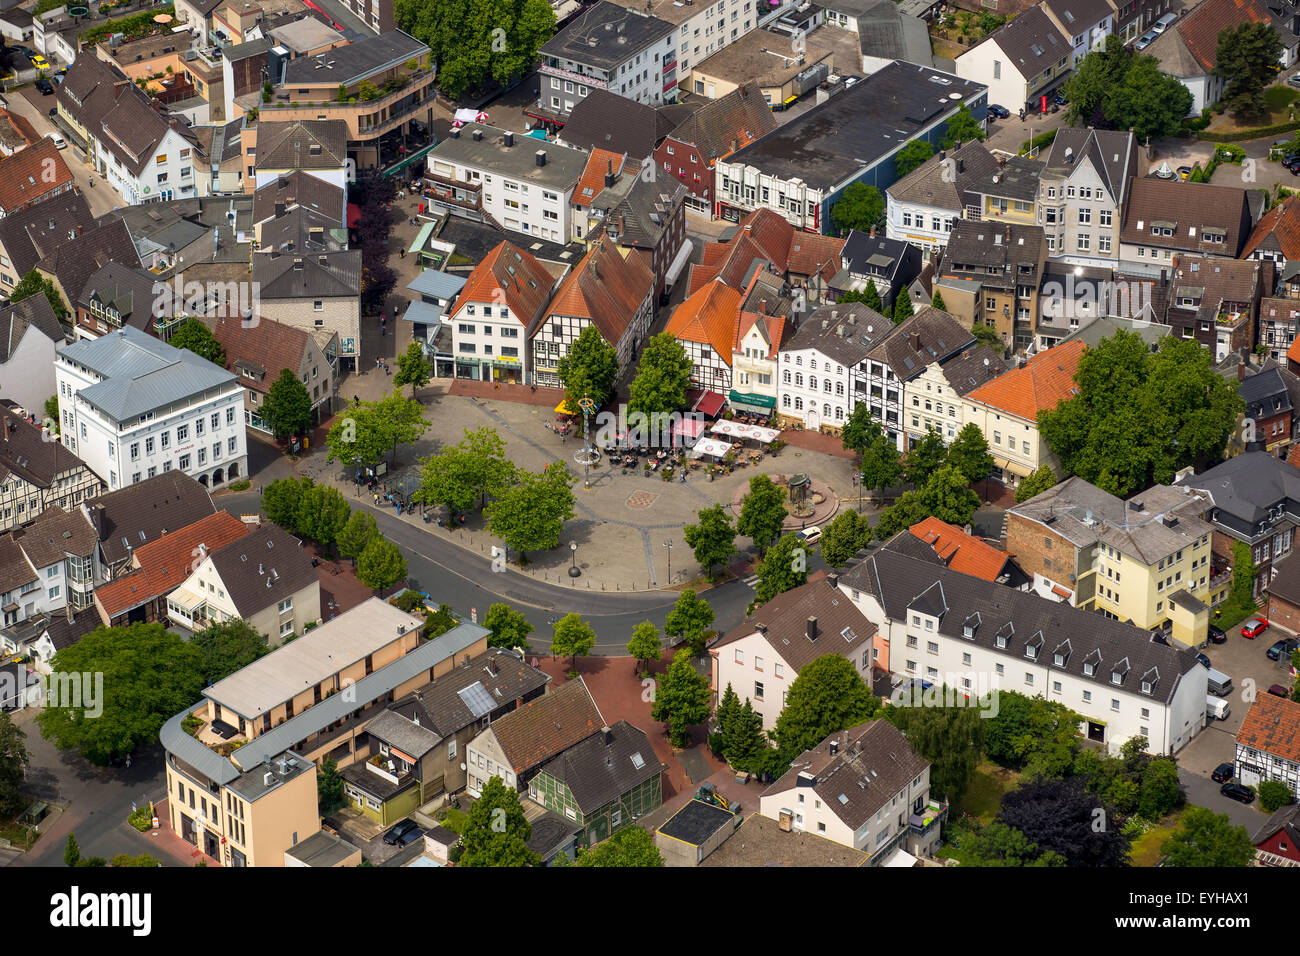 Kamen marketplace, town centre, Kamen, Ruhr district, North Rhine-Westphalia, Germany Stock Photo